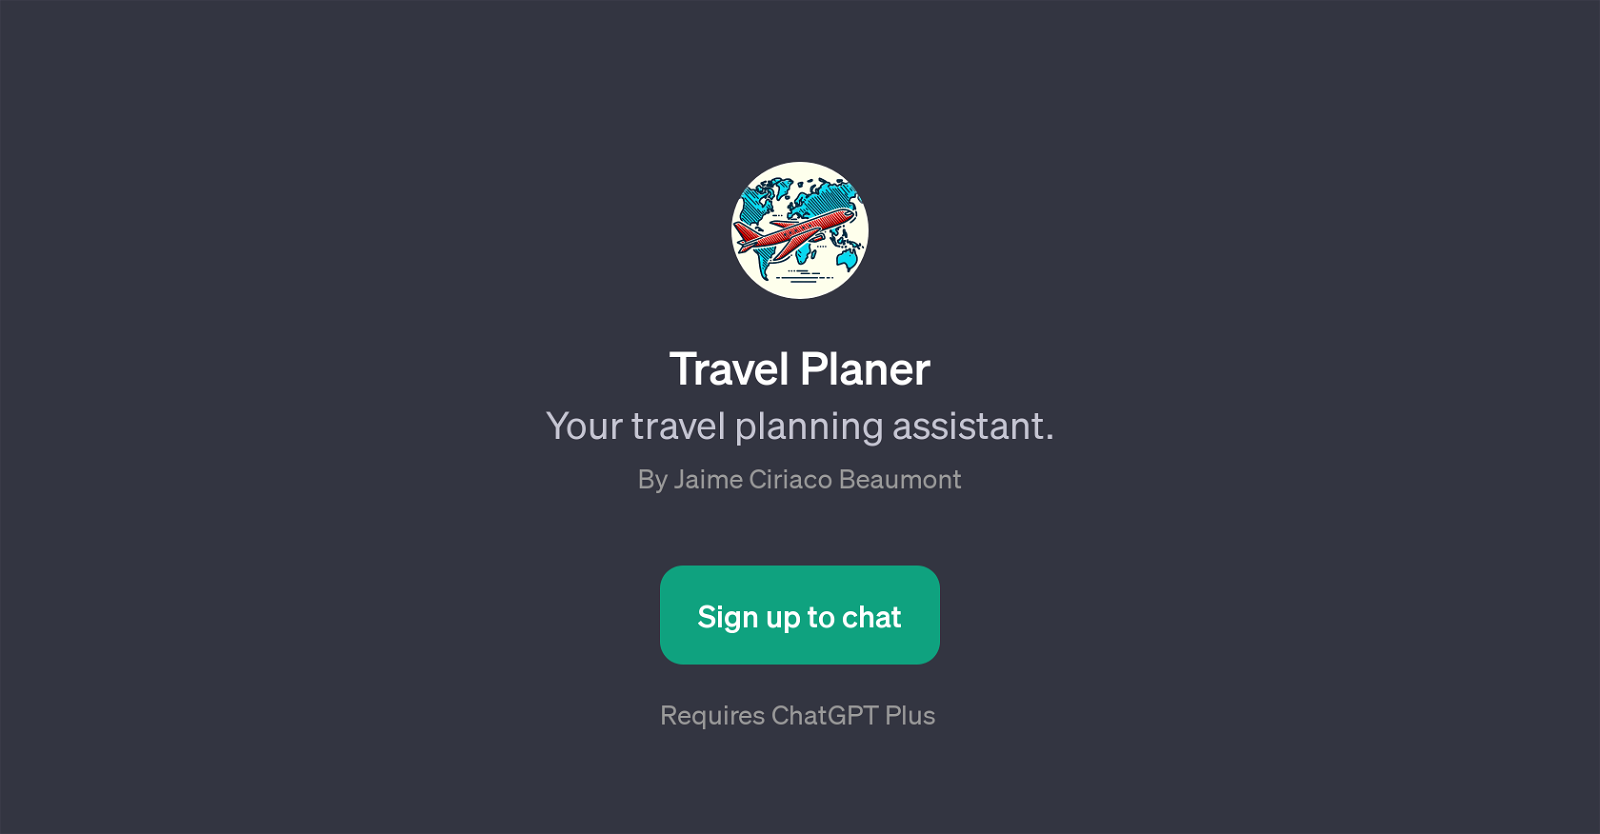 Travel Planer website